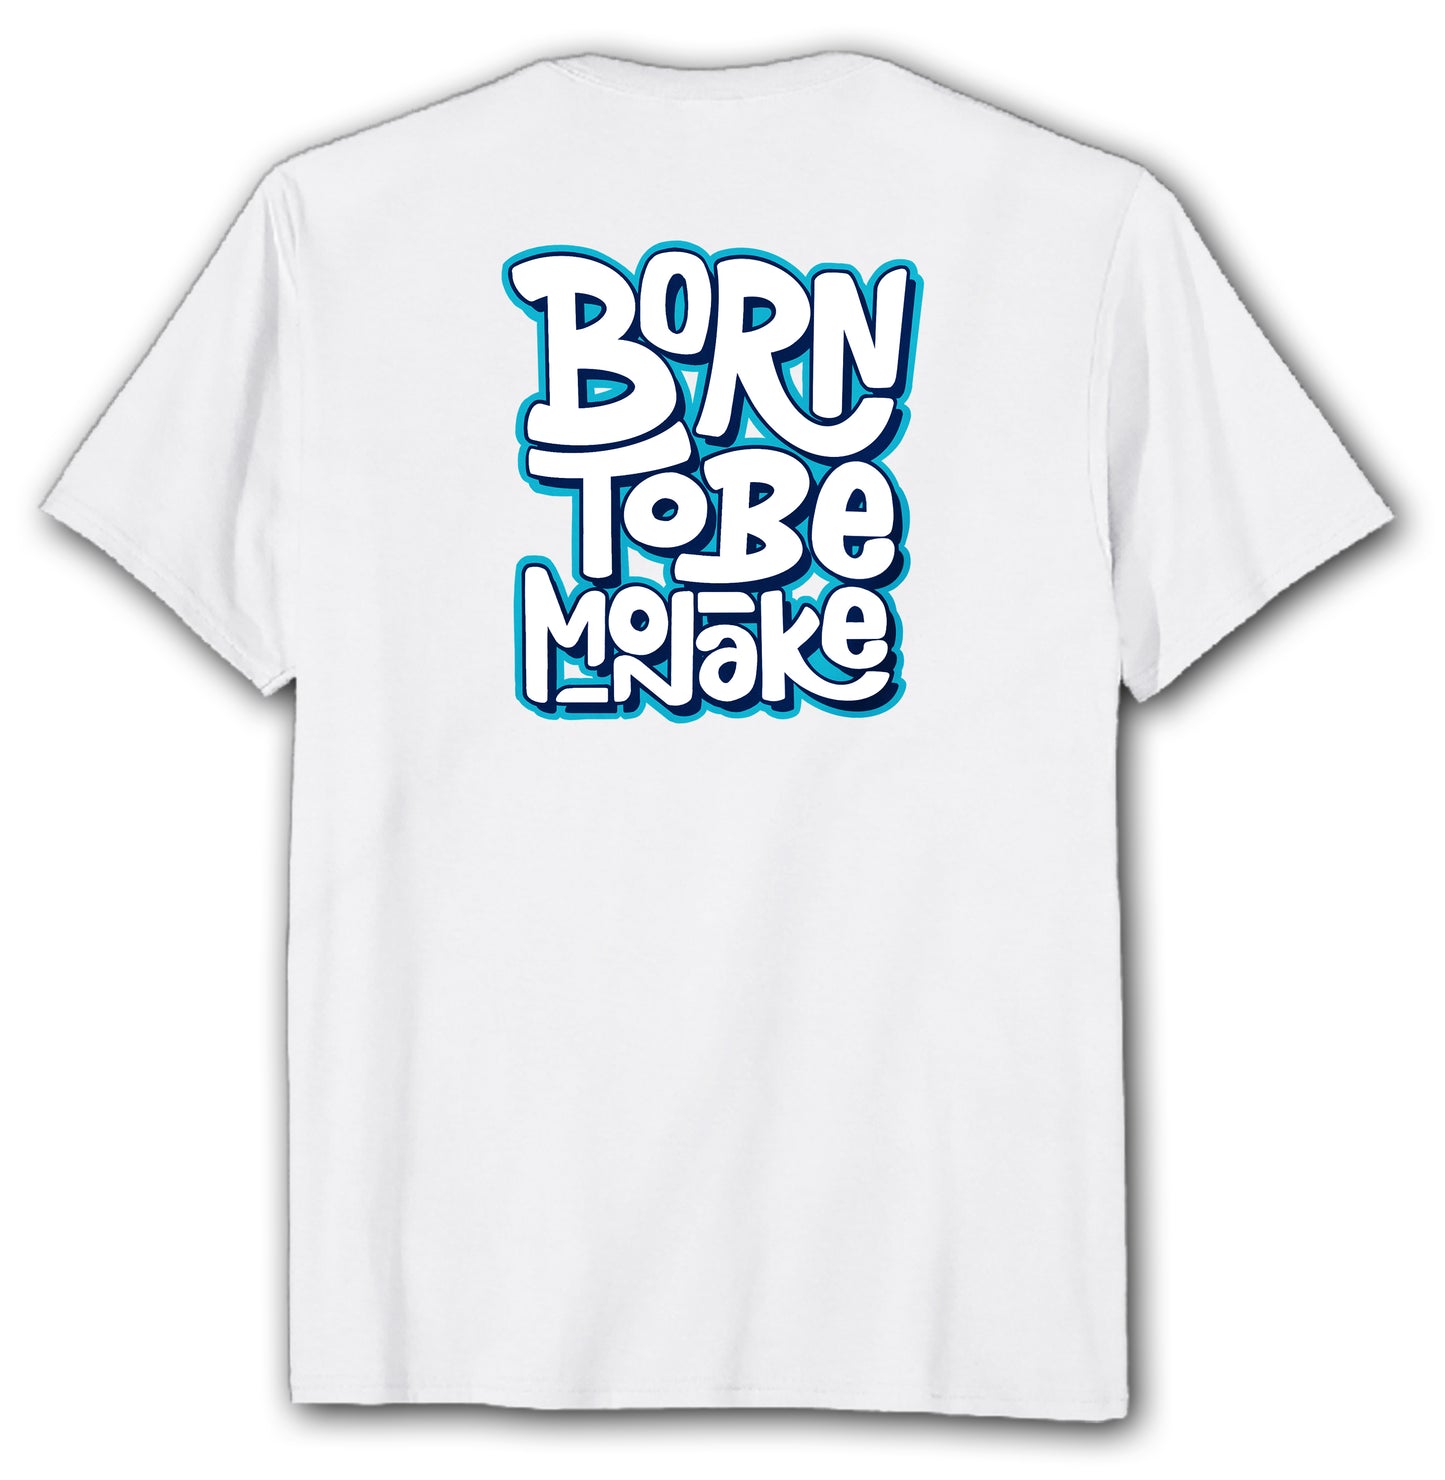 Mod.0.12 Camiseta Born To Be Monake Blanca